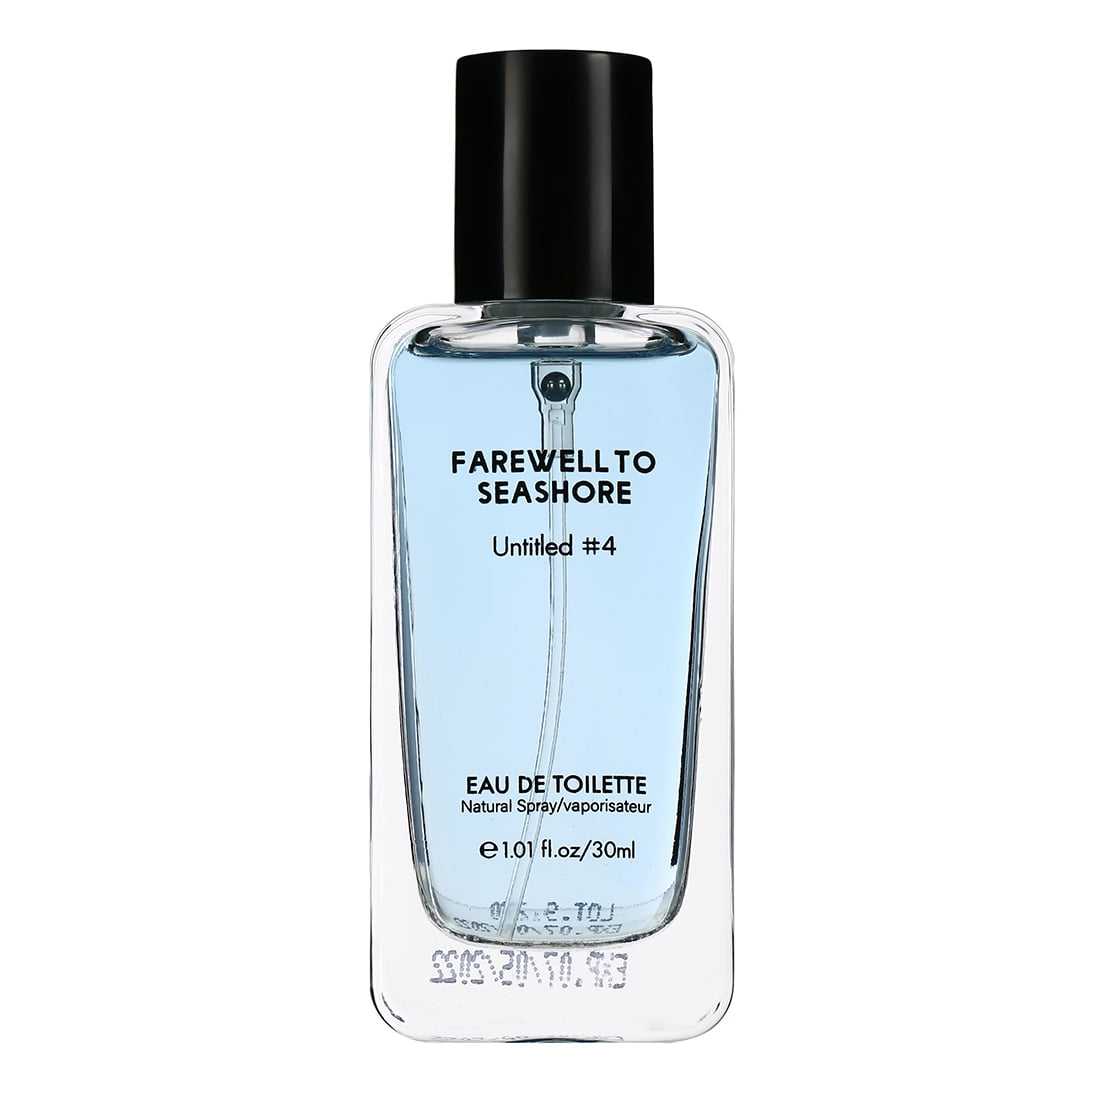 MINISO Farewell to Seashore Perfume fragrance Eau de Toilette (Nameless ...